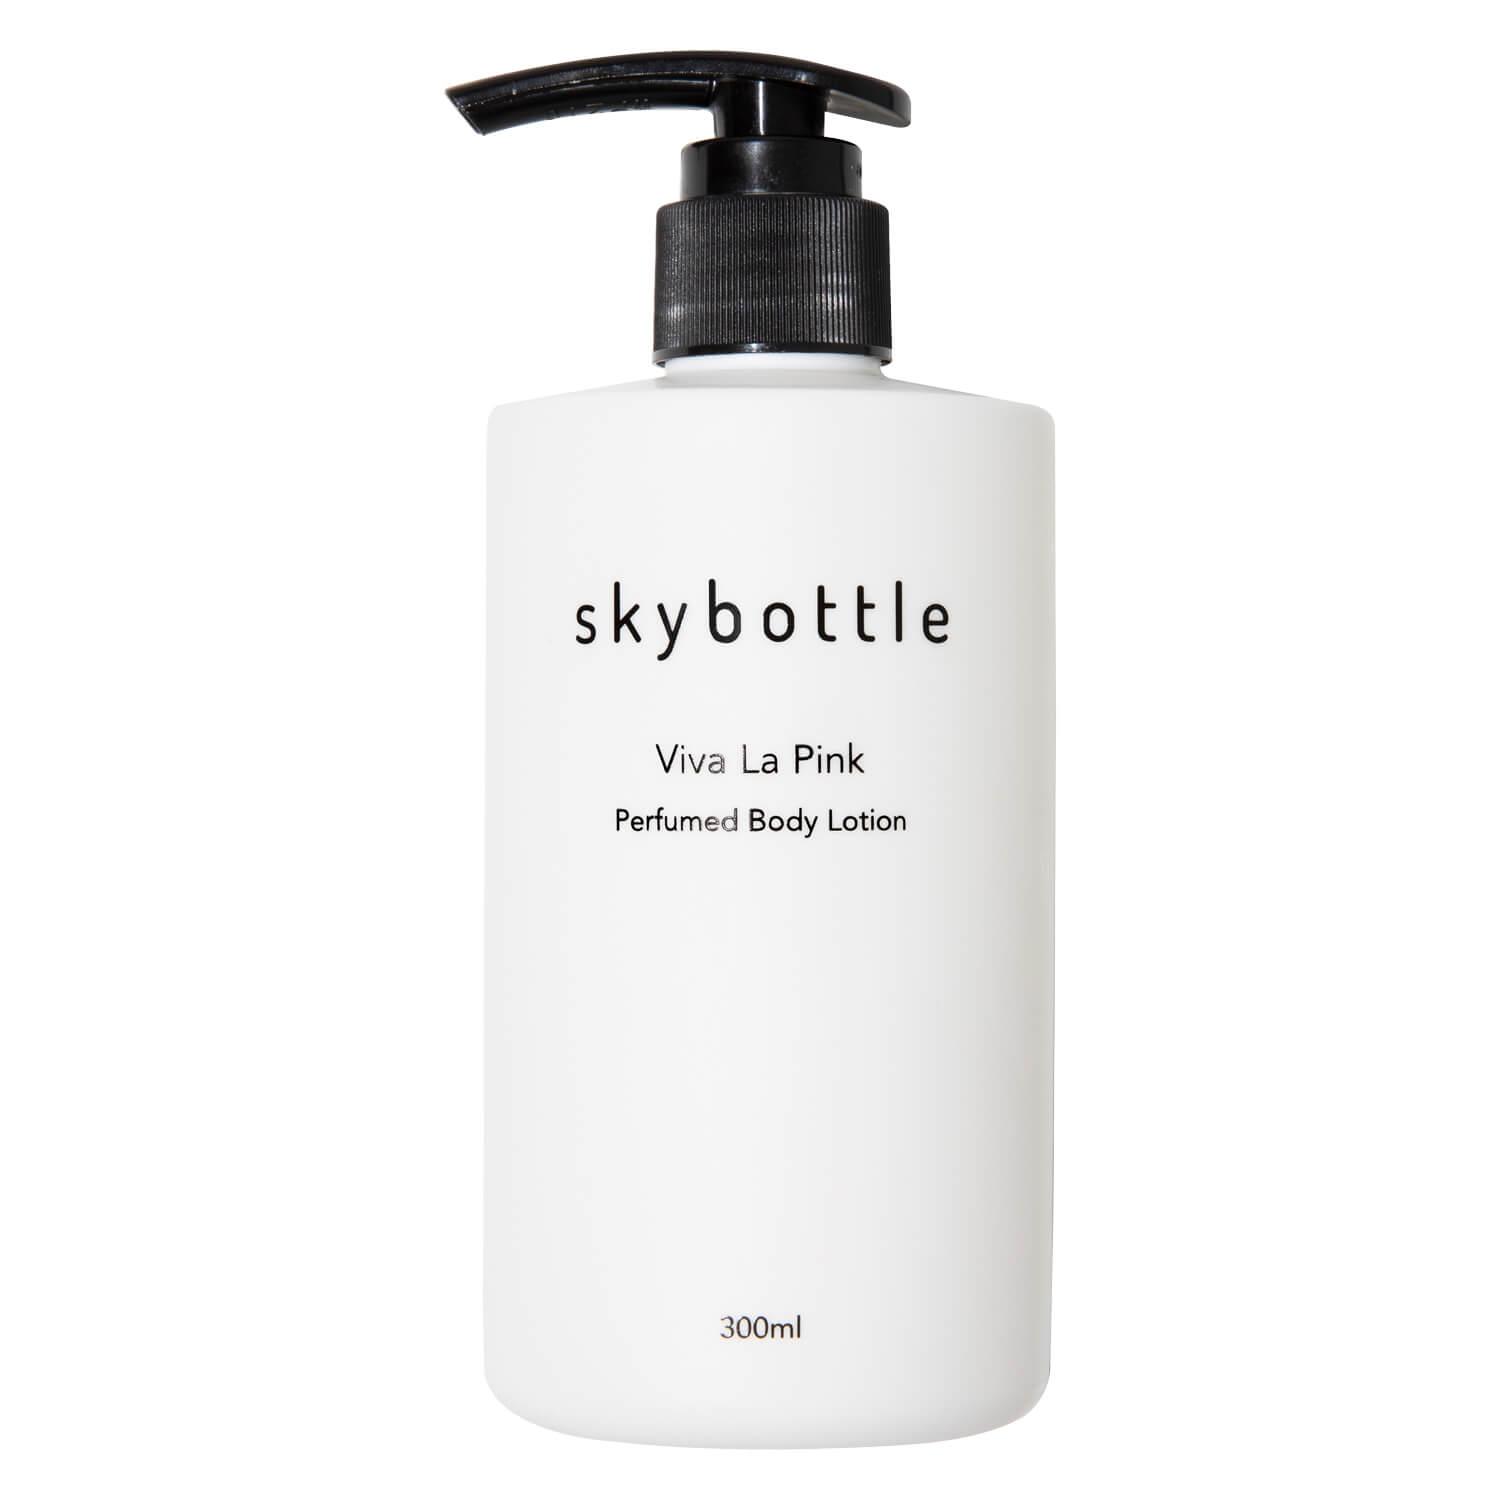 Skybottle - Viva La Pink Perfumed Body Lotion